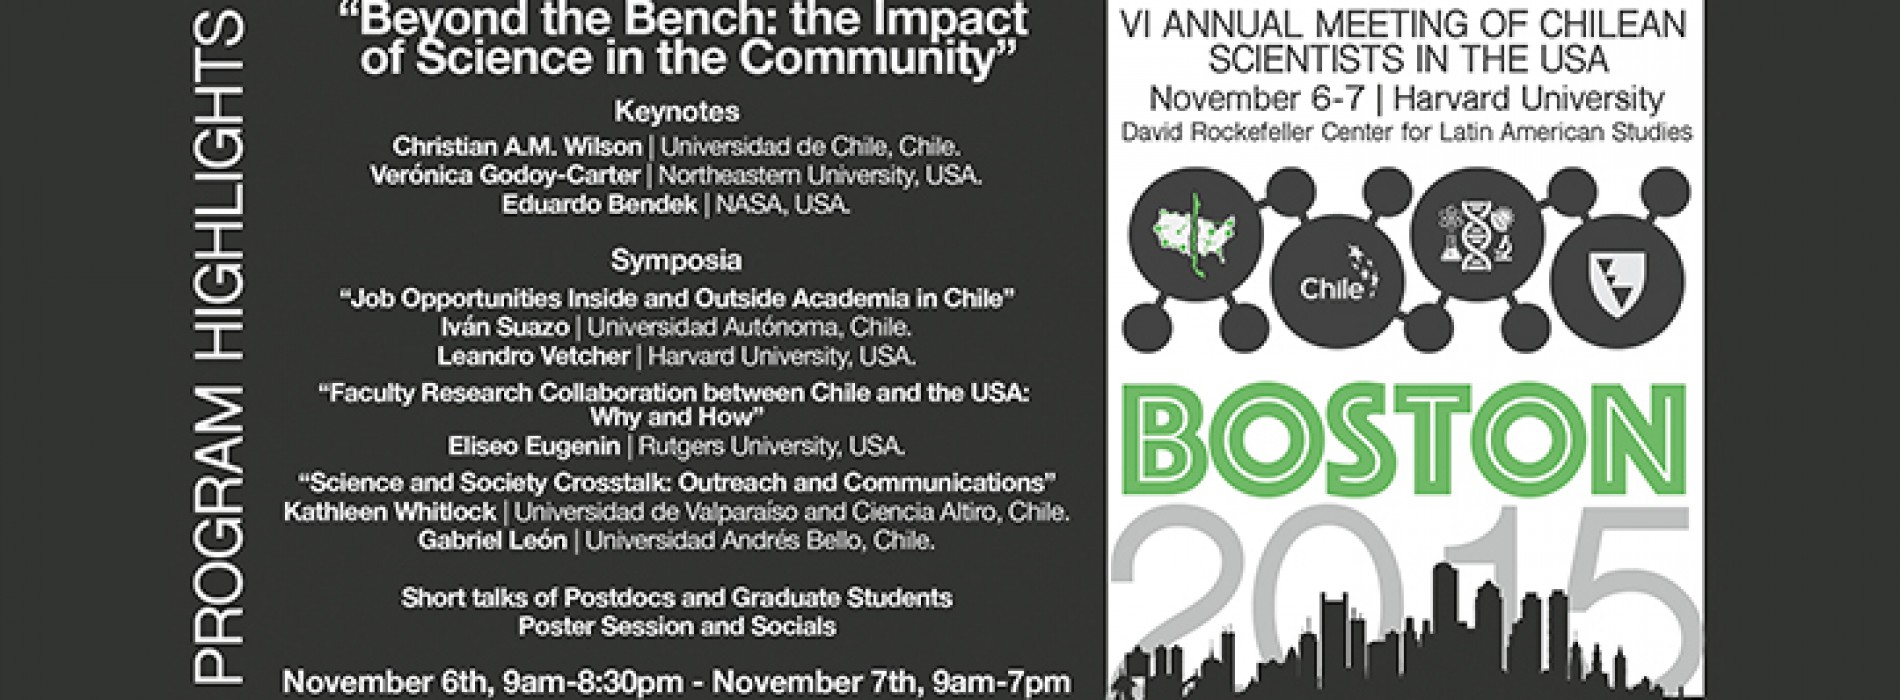 BOSTON 2015 VI Annual Meeting of Chilean Scientist in the USA, November 6-7, Harvard University